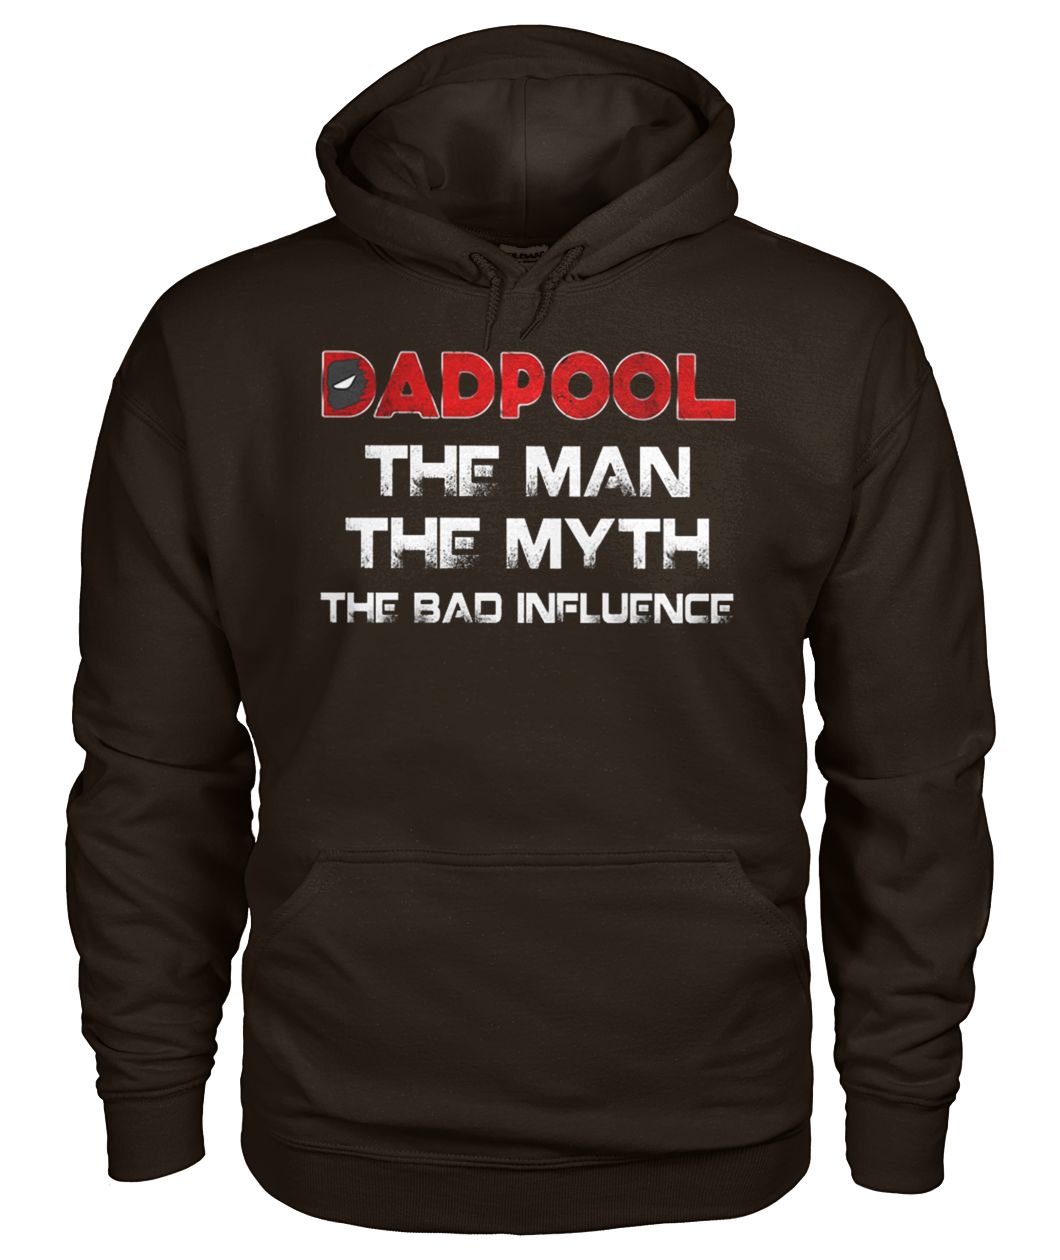 Dadpool the man the myth the bad influence gildan hoodie